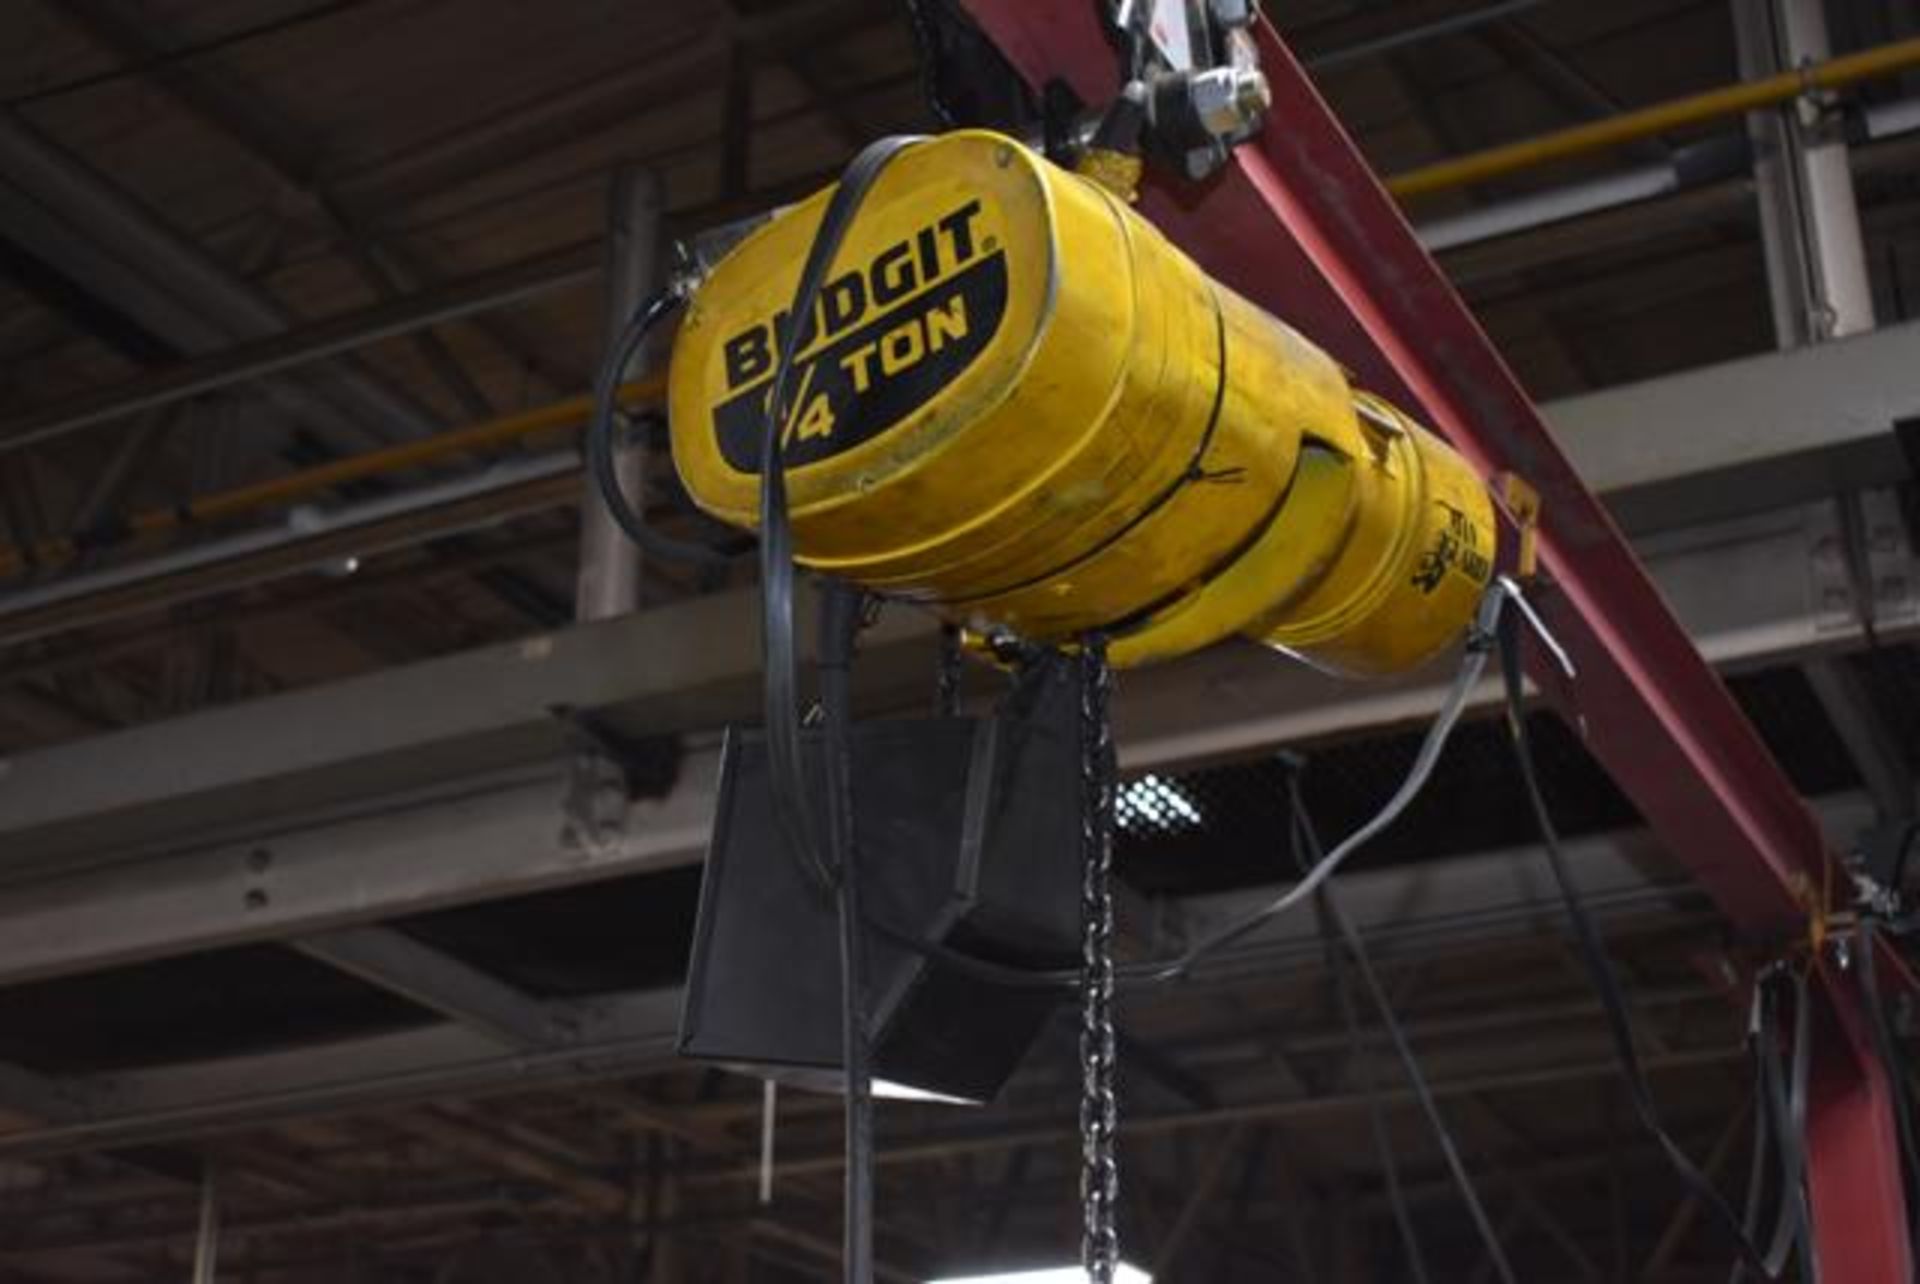 Demag Gantry Crane, 16' Span w/Budgit 1/4 Ton Electric Chain Hoist - Image 2 of 2